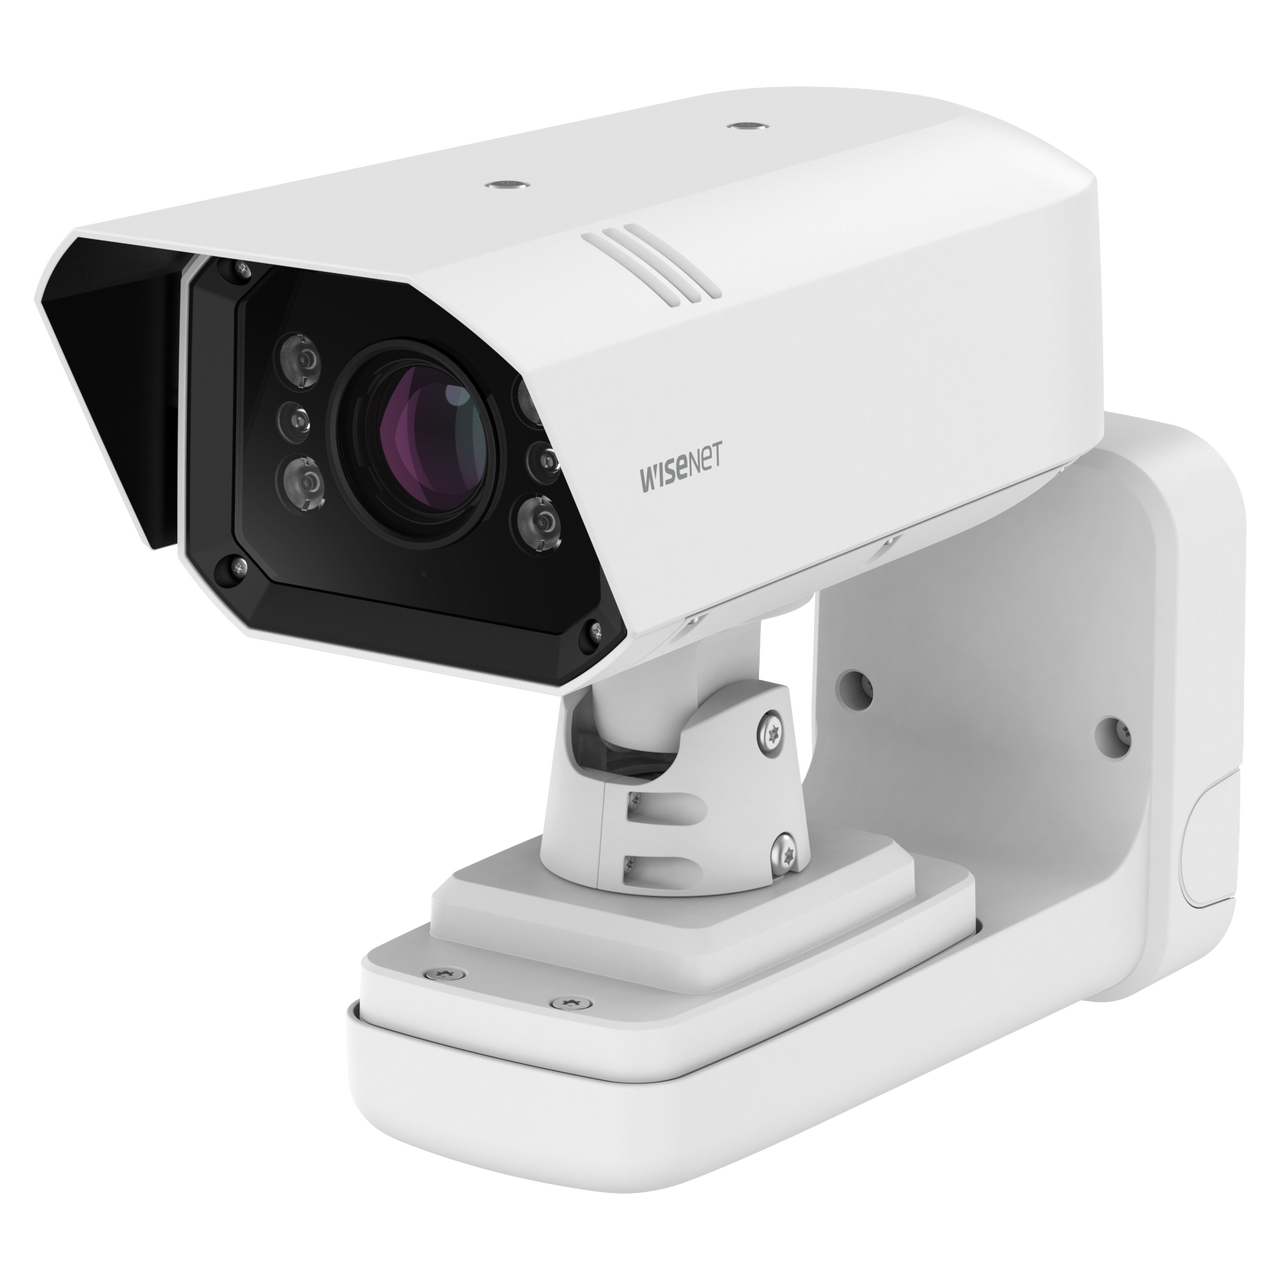 Hanwha TNO-7180RLP High-speed License Plate Capture Camera